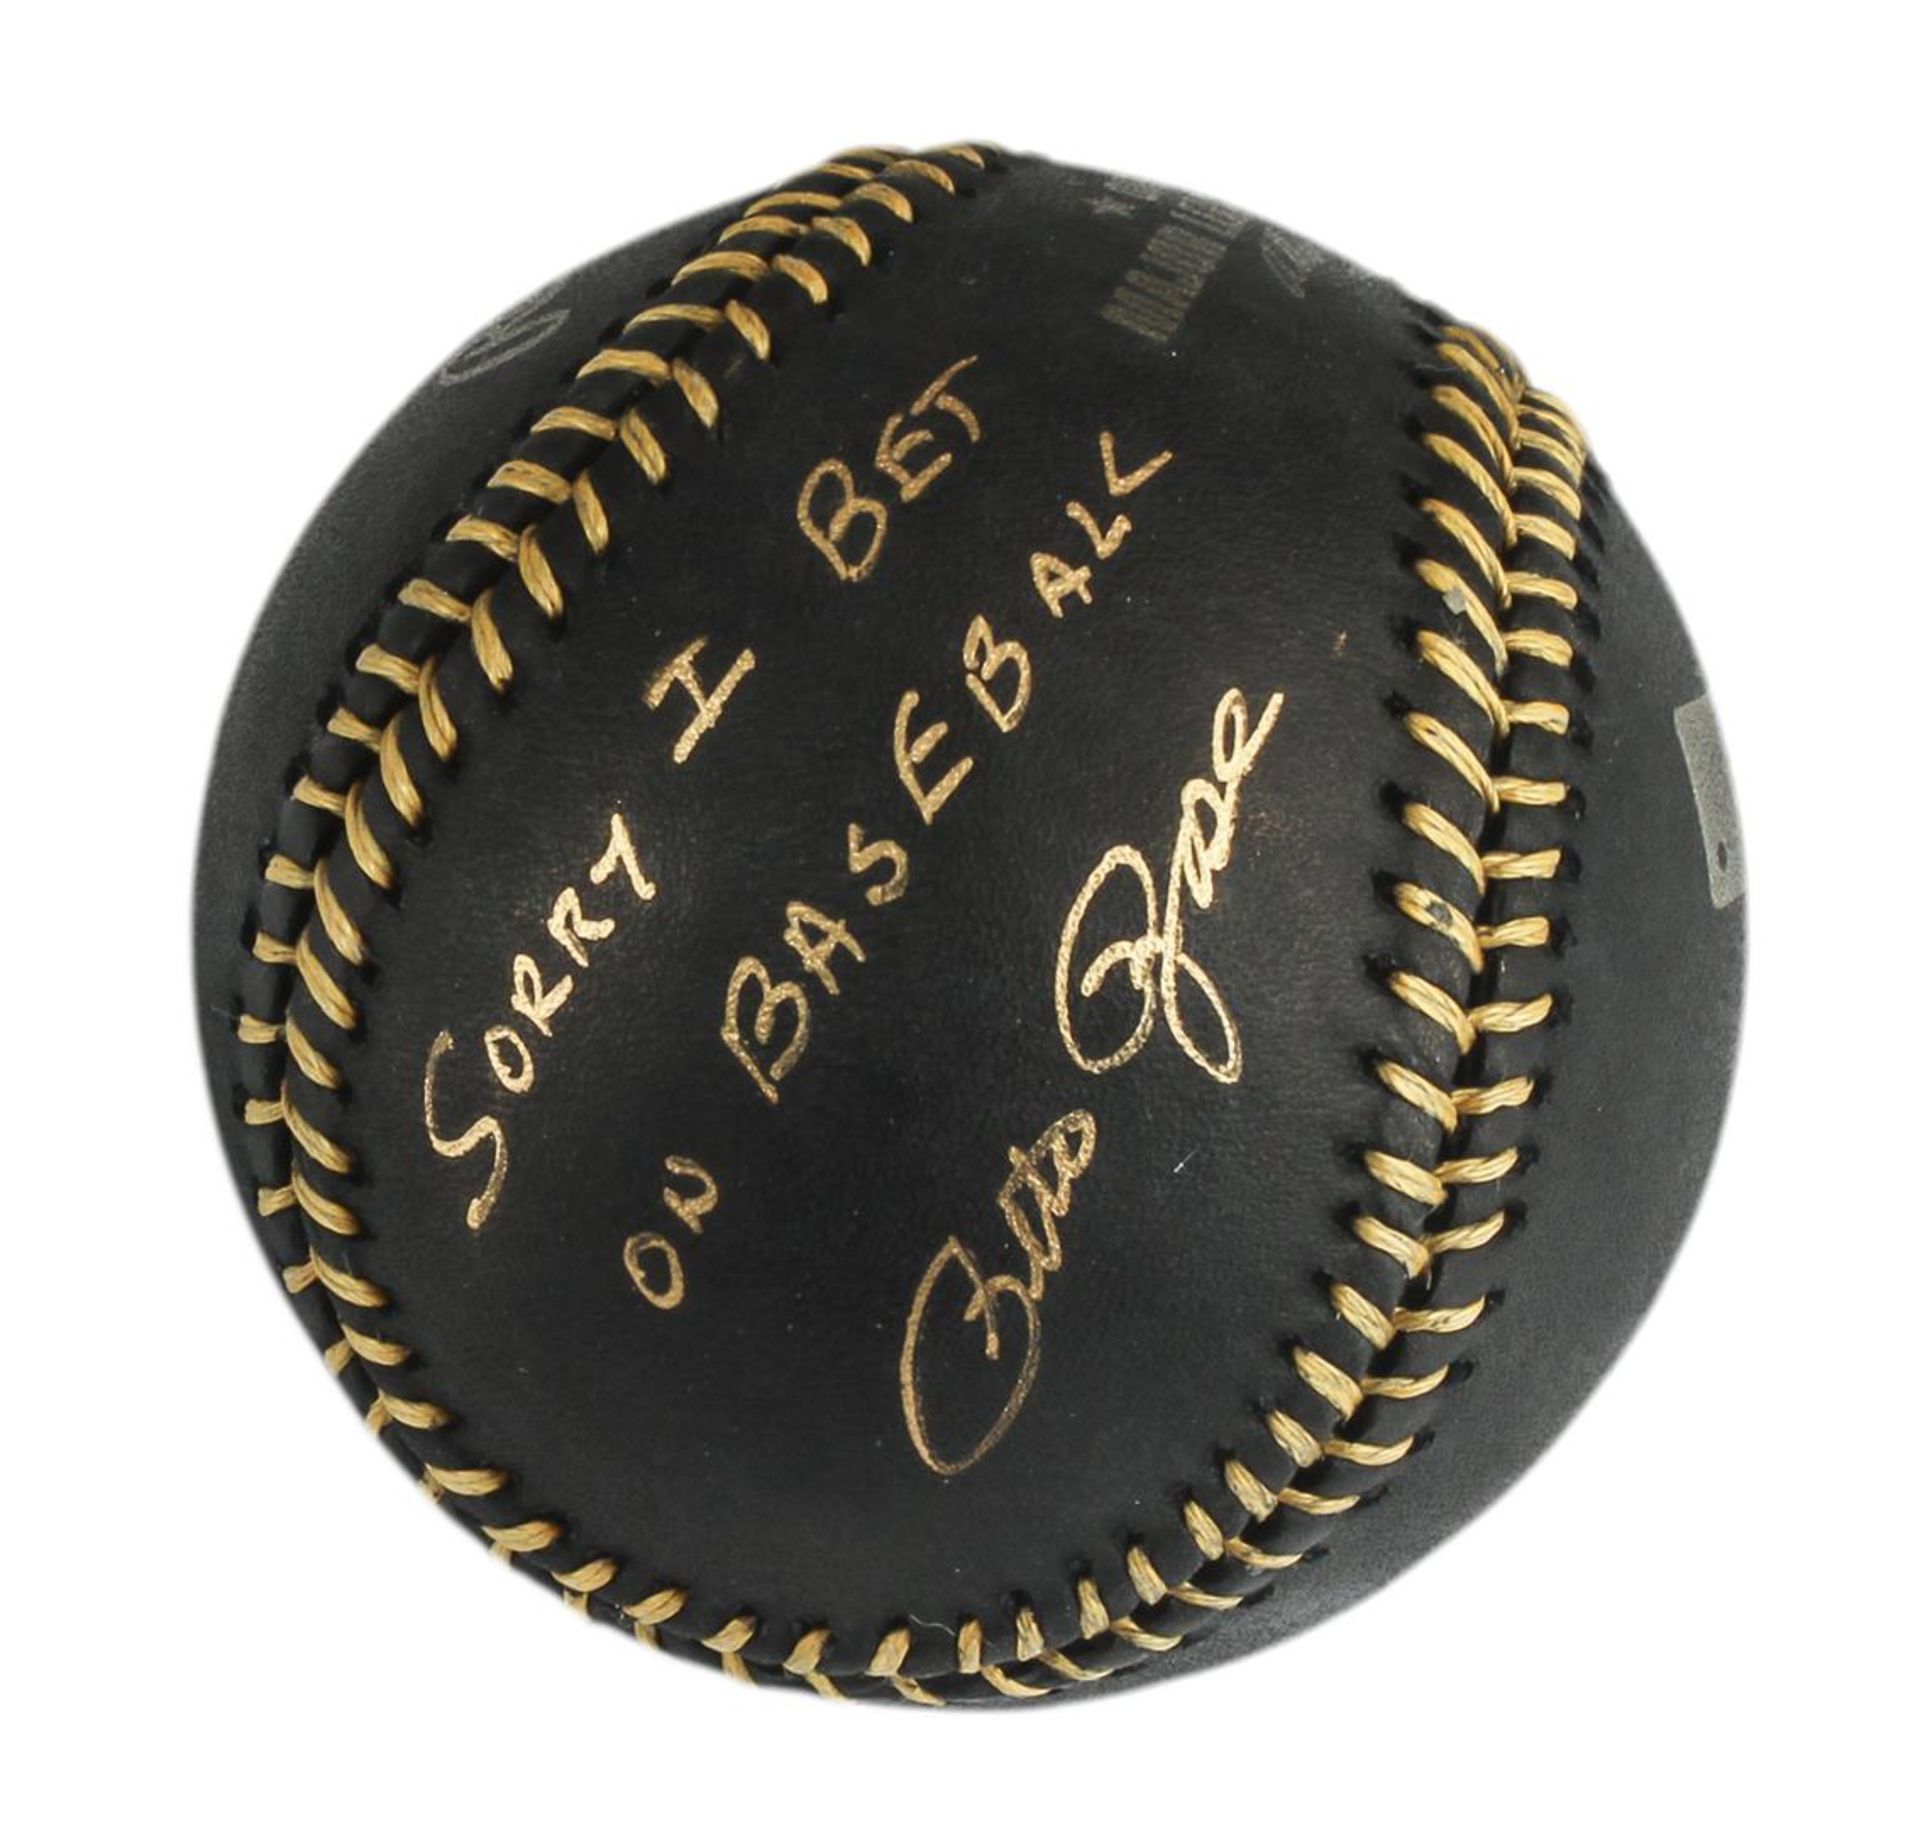 Autographed Pete Rose "I'm Sorry" Black Baseball